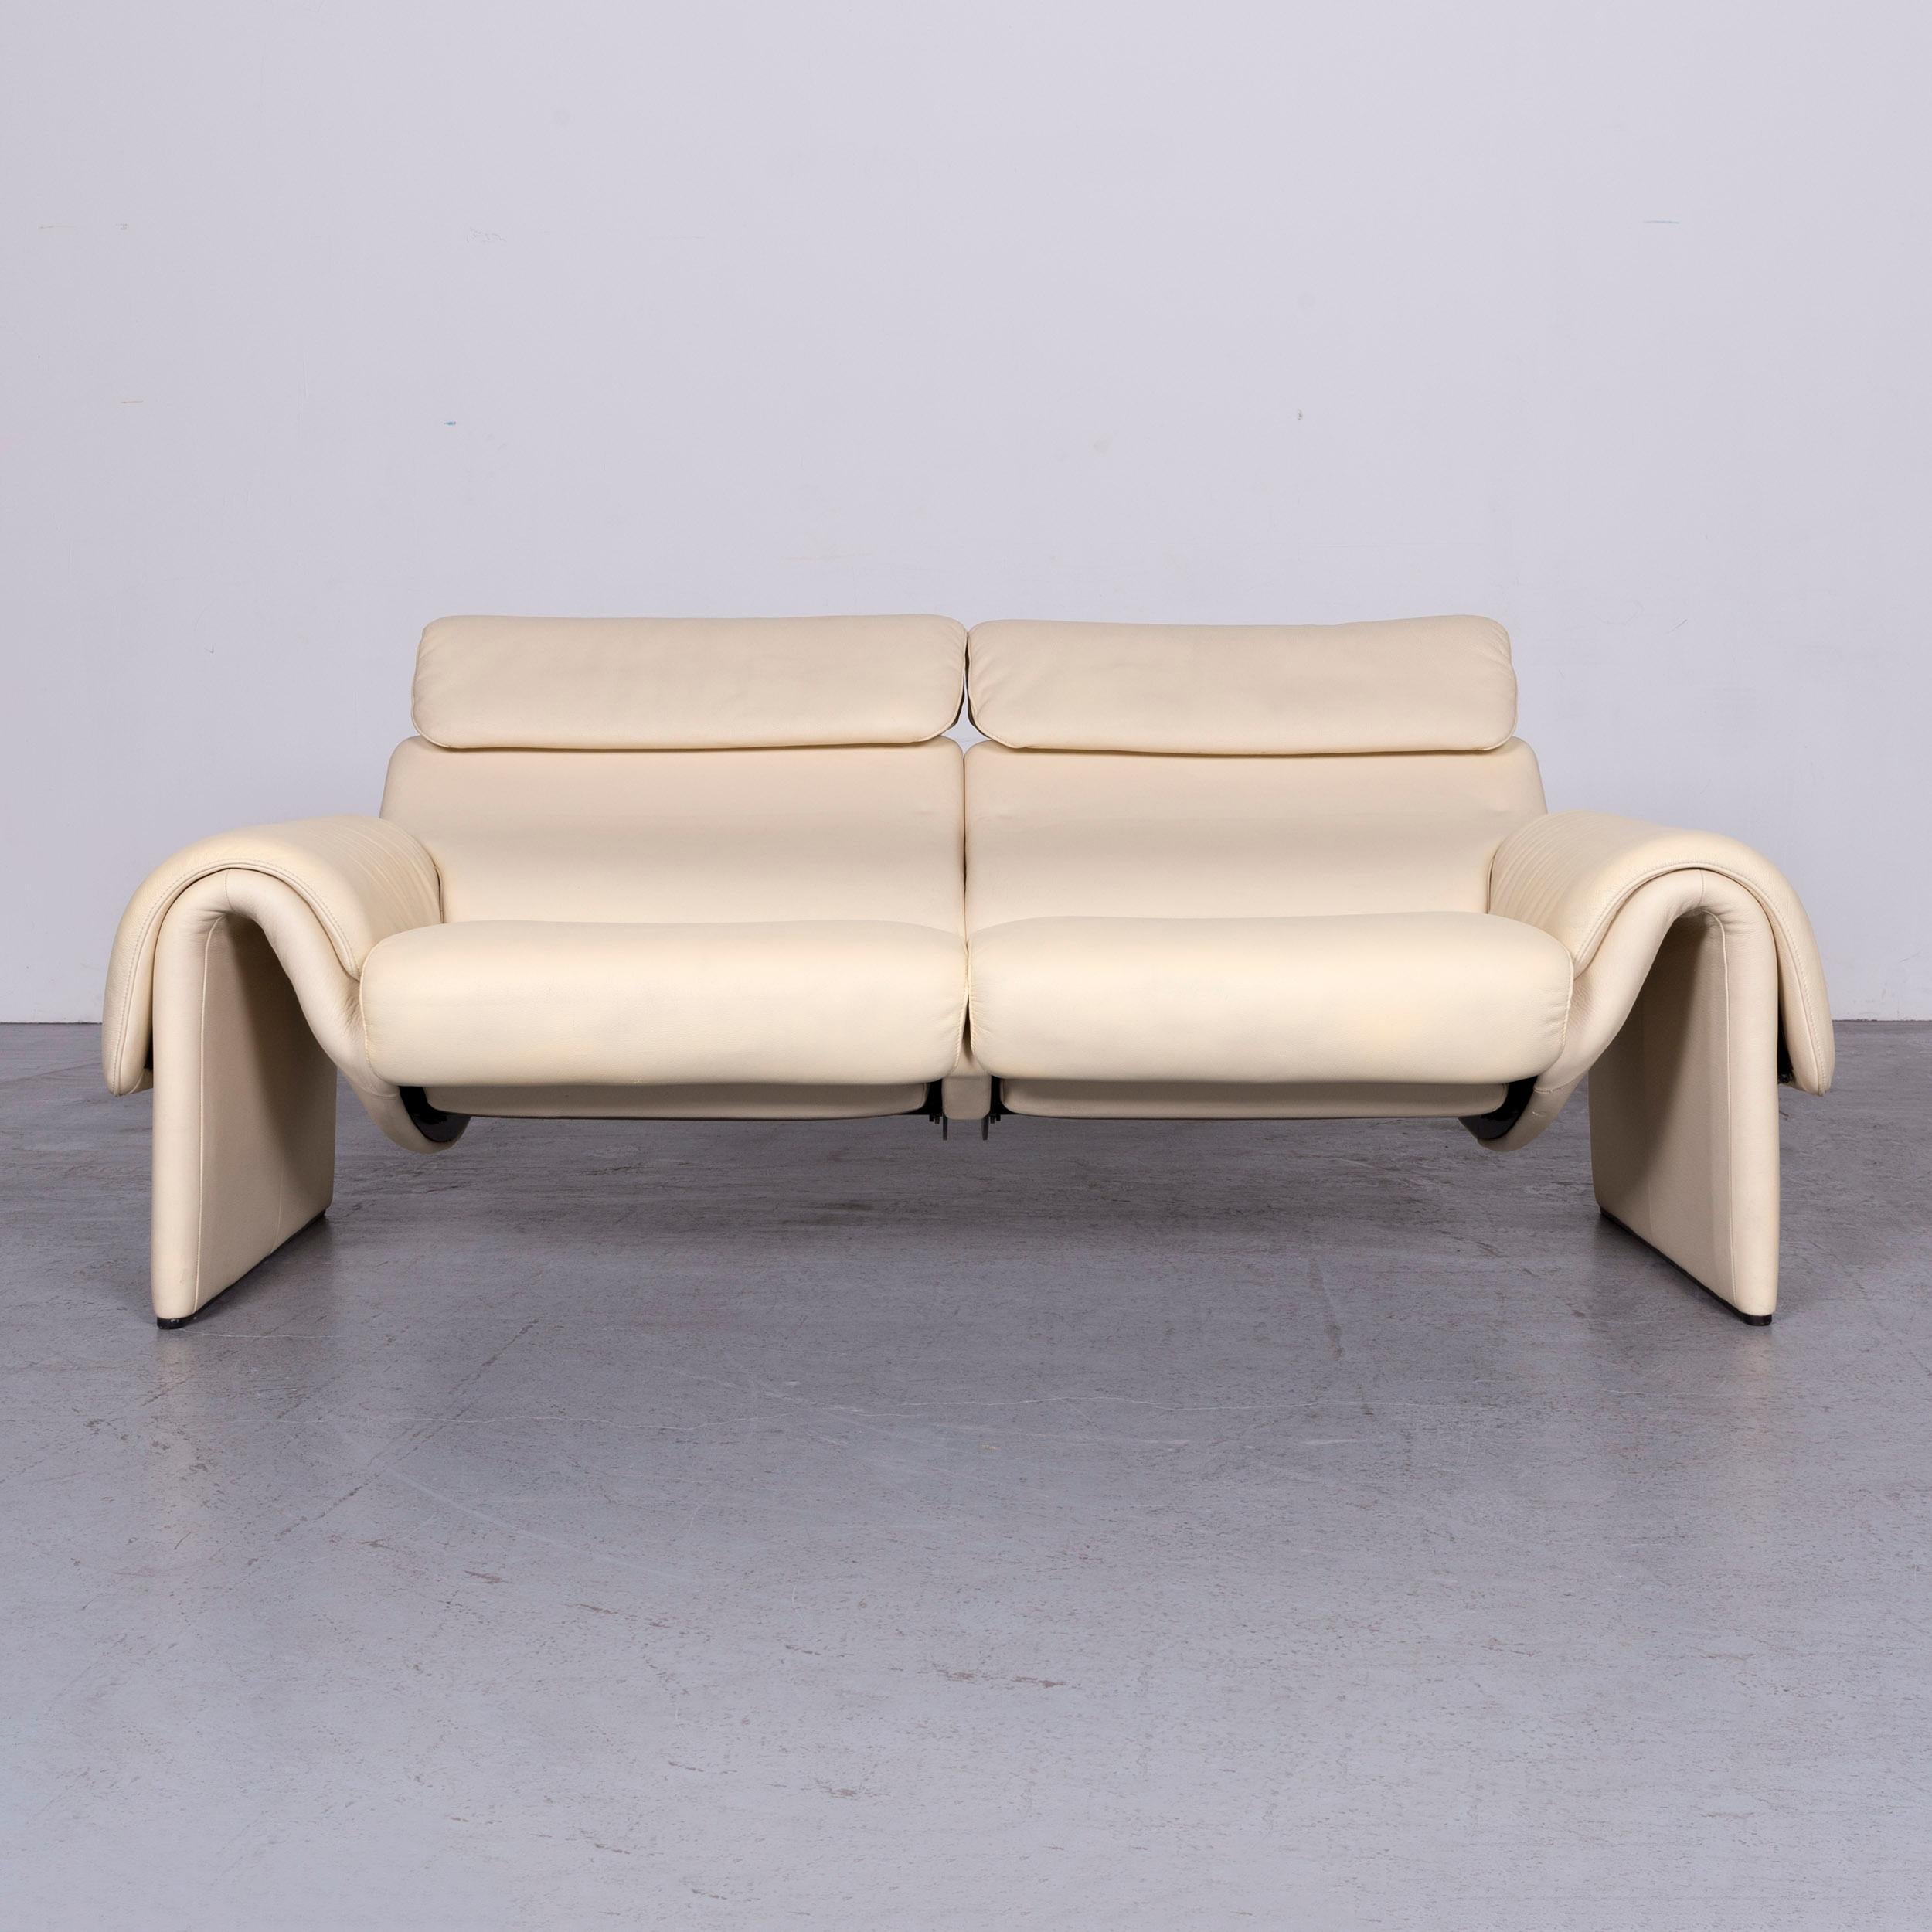 Swiss De Sede DS 2000 Designer Sofa Crème Leather Relax Function Couch